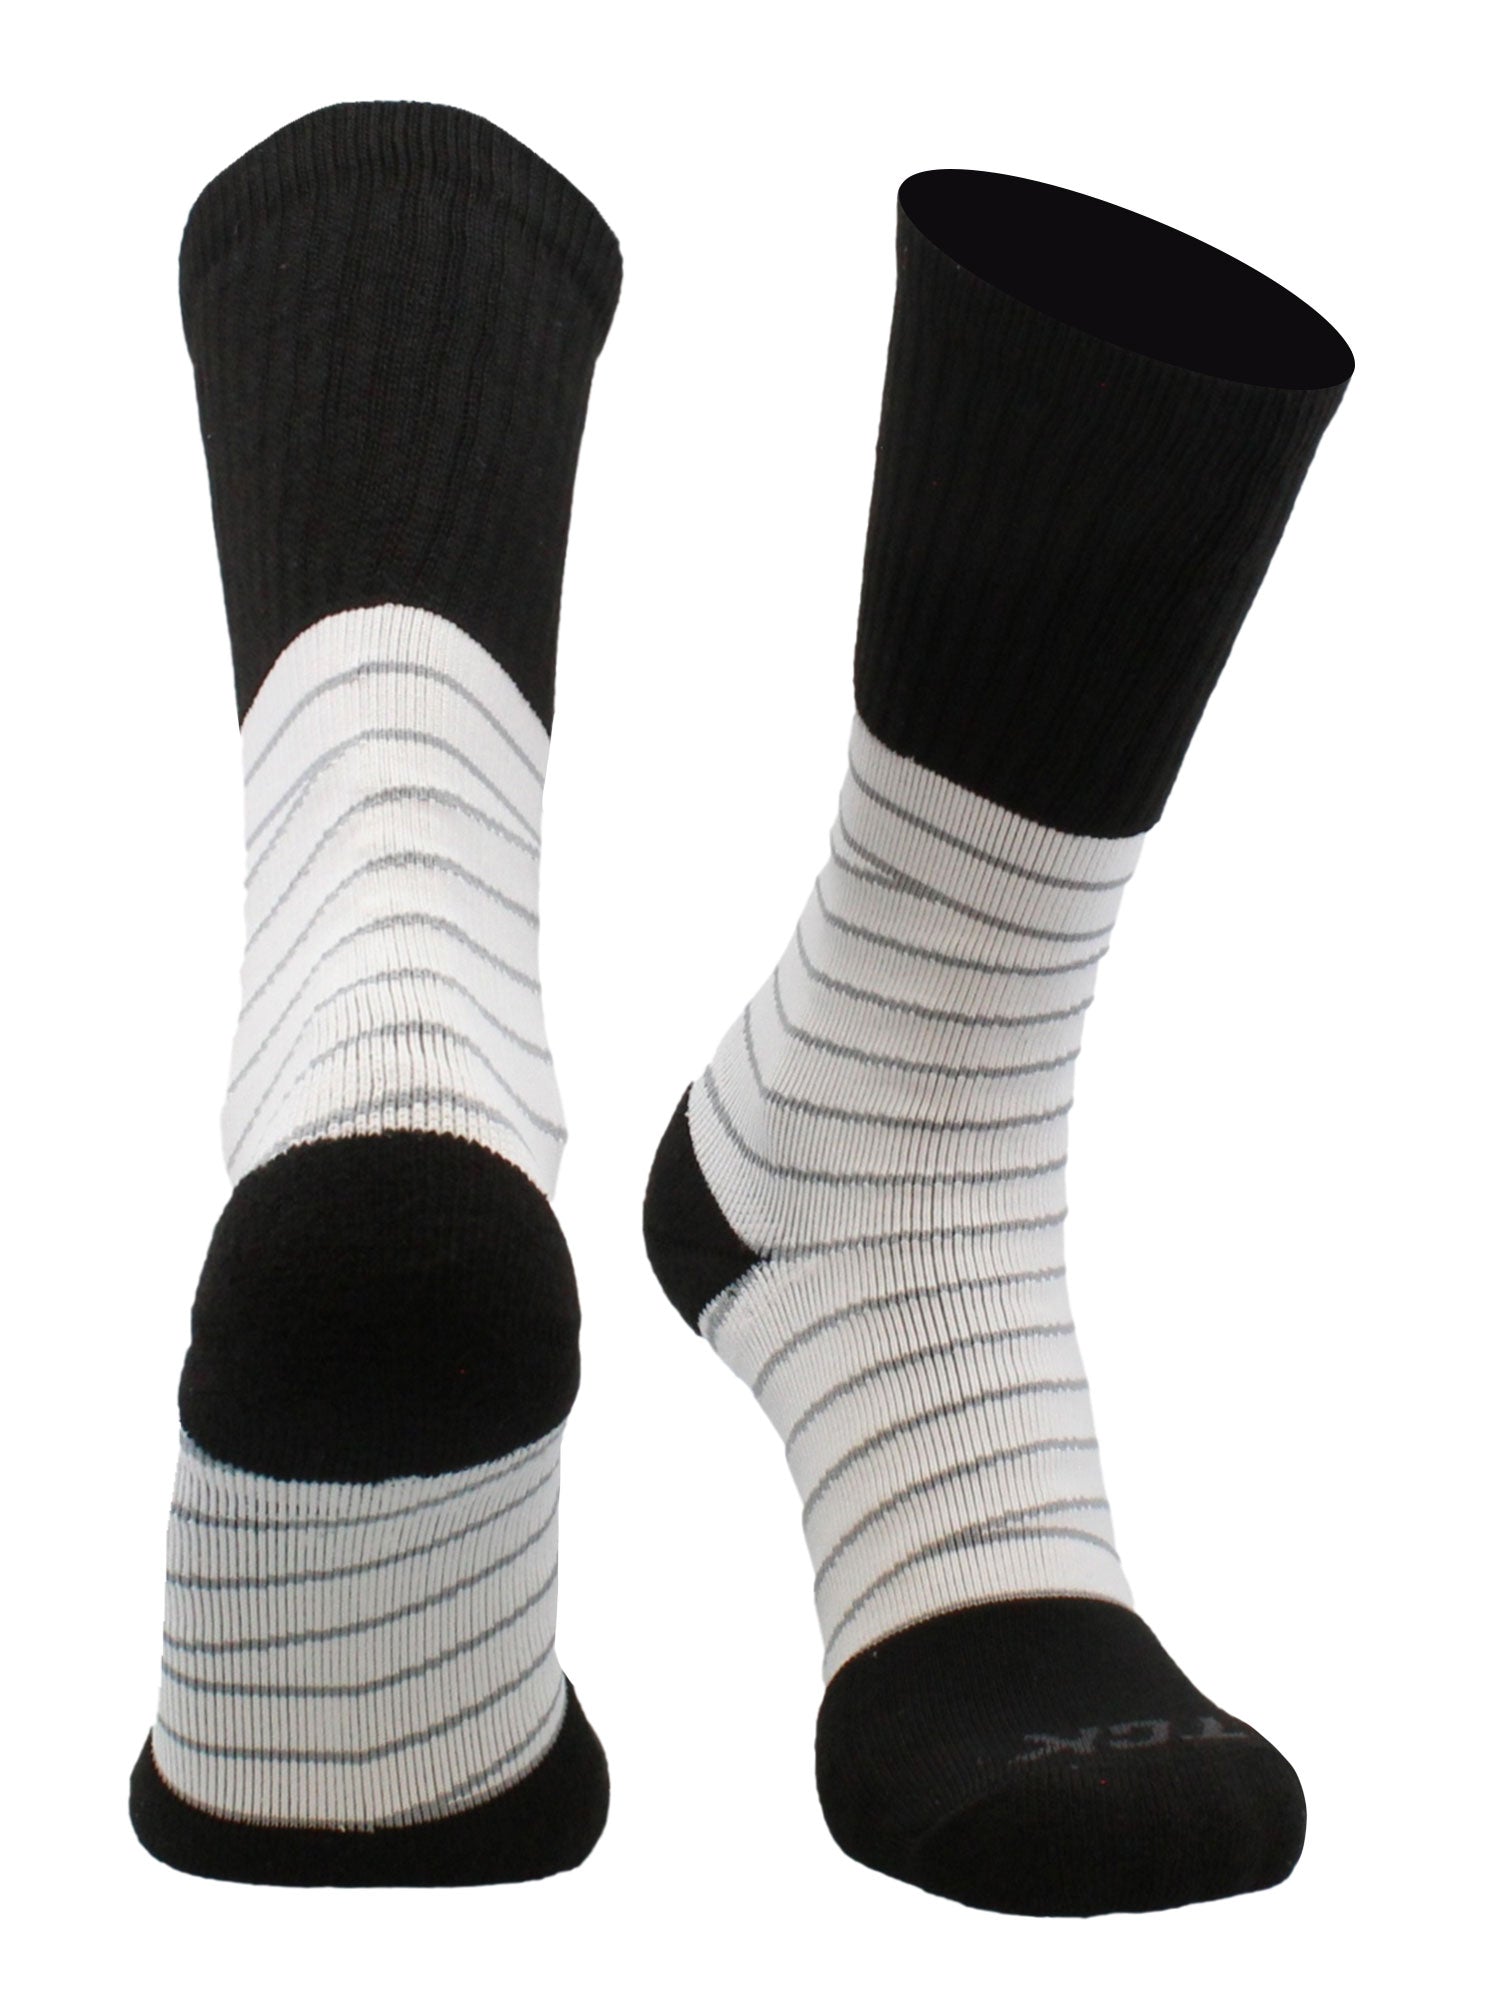 black ankle support tape socks